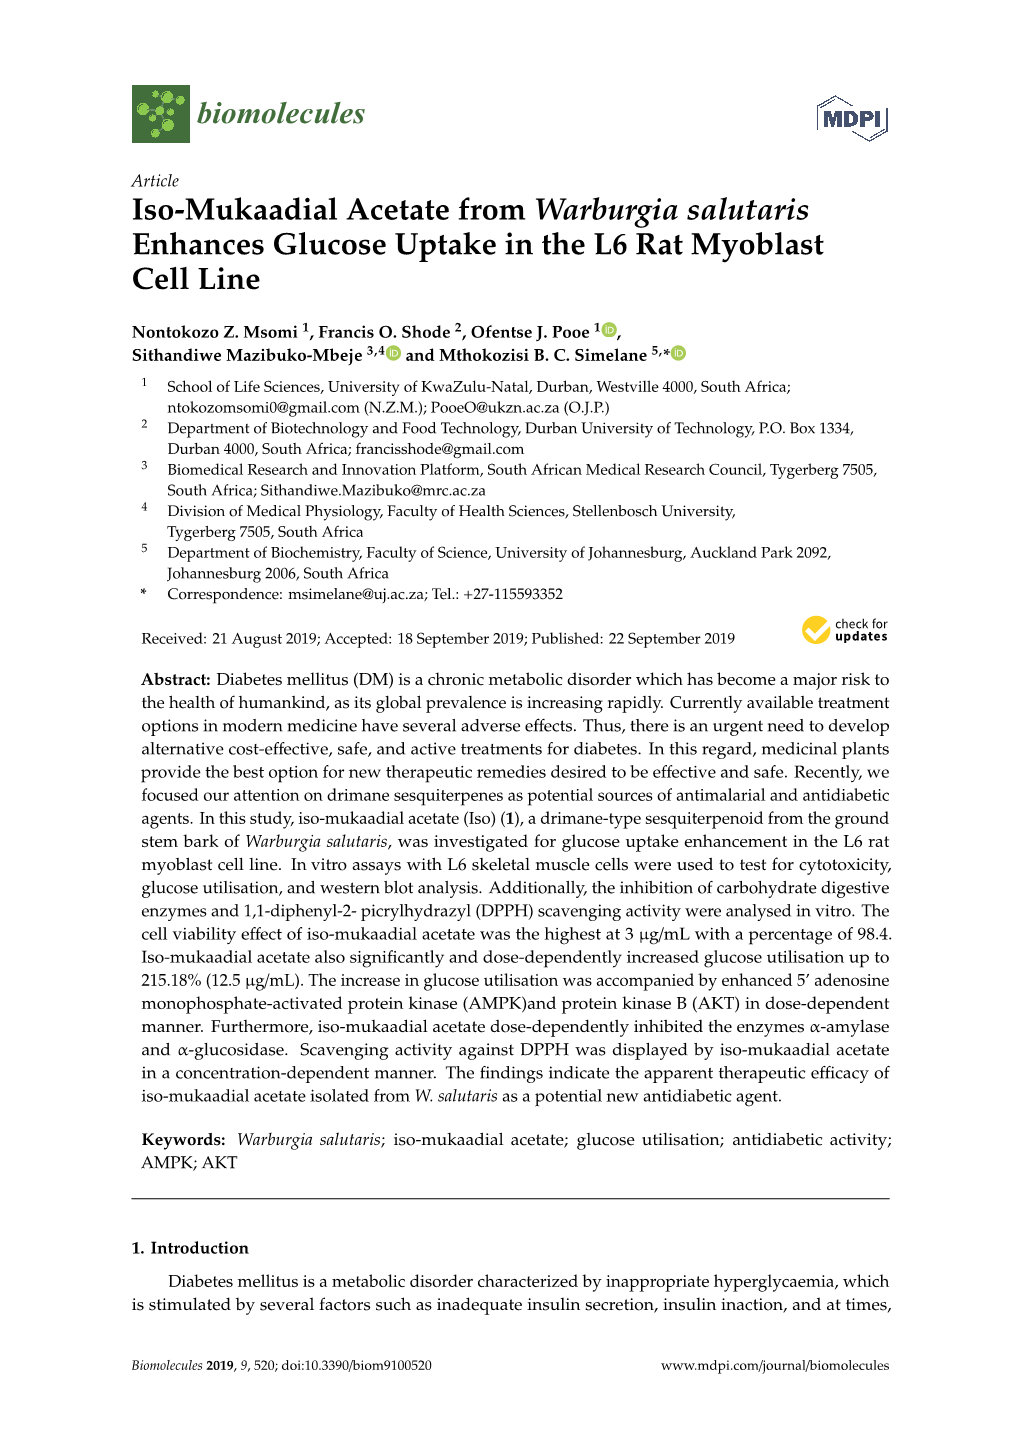 Iso-Mukaadial Acetate from Warburgia Salutaris Enhances Glucose Uptake in the L6 Rat Myoblast Cell Line